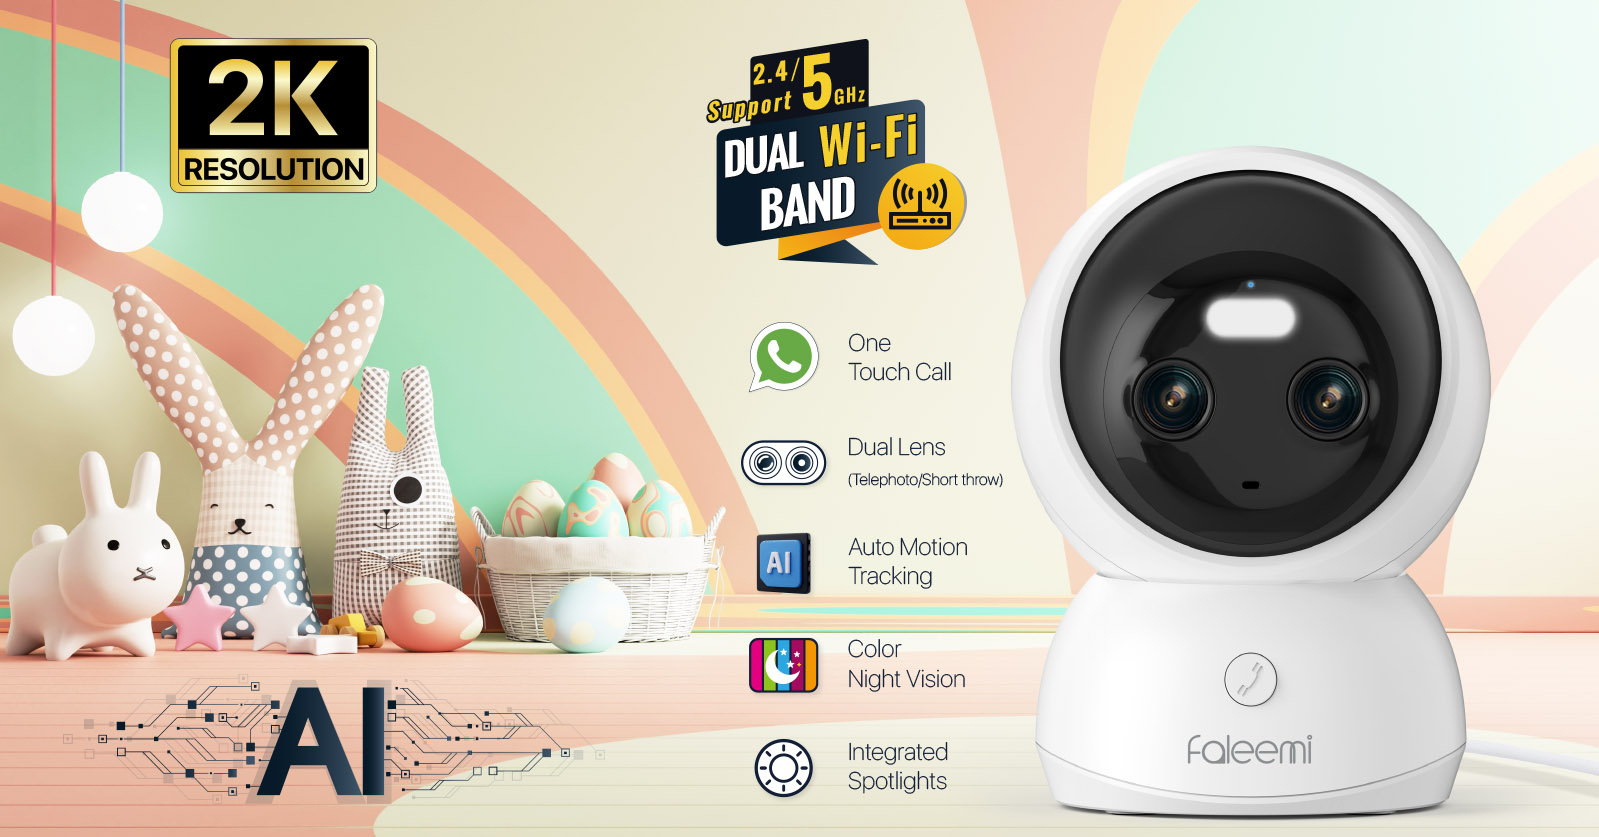 Faleemi 2K WiFi Dual Lens Dual band Smart Security Camera-NEW